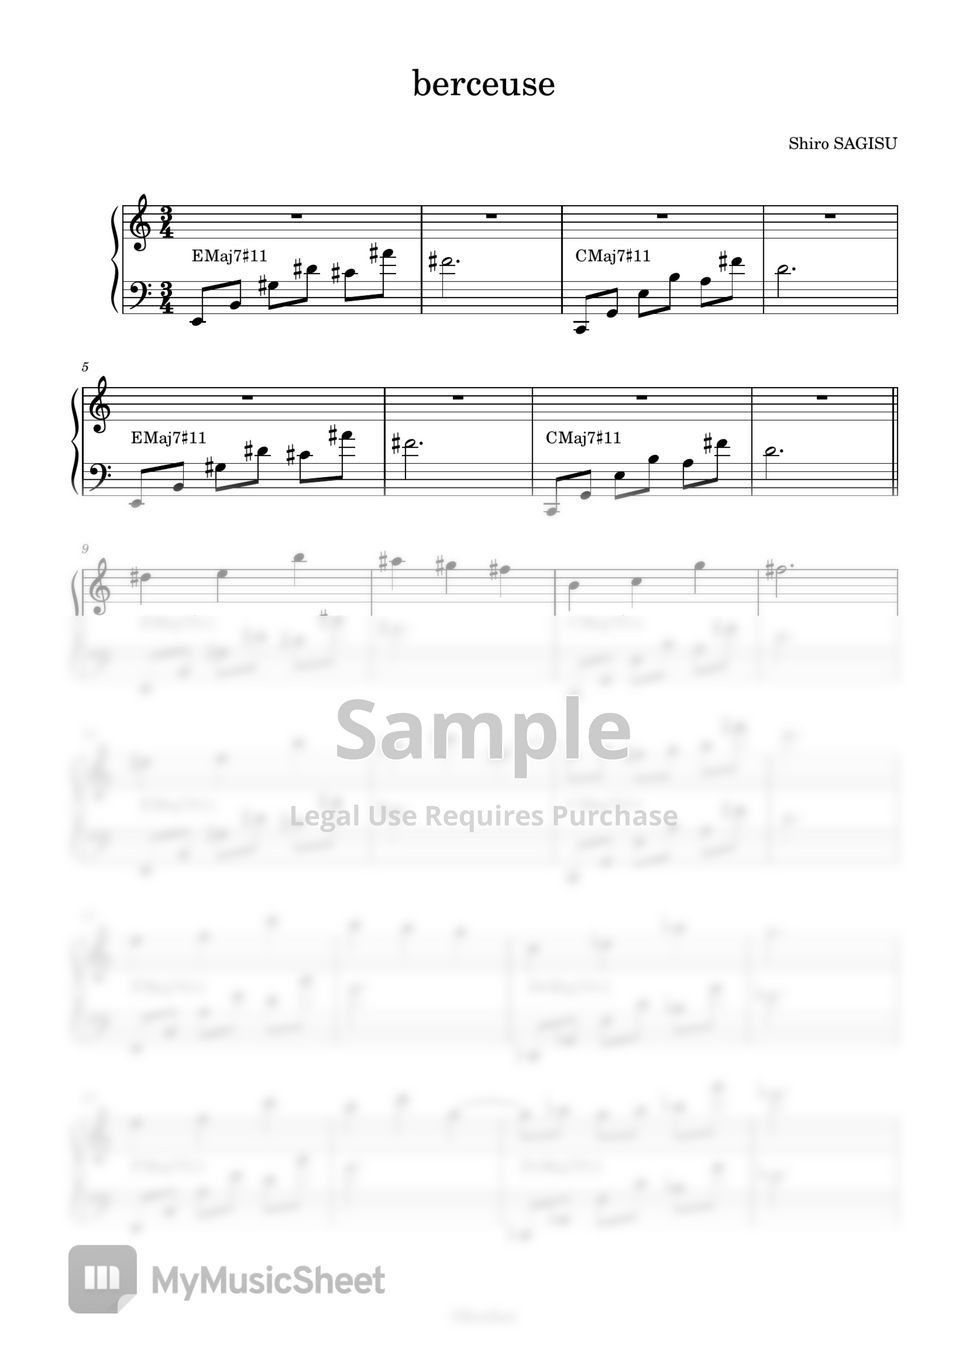 Evangelion: 3.0+1.0 (SHIN EVANGELION) - berceuse -piano solo- by KenBan